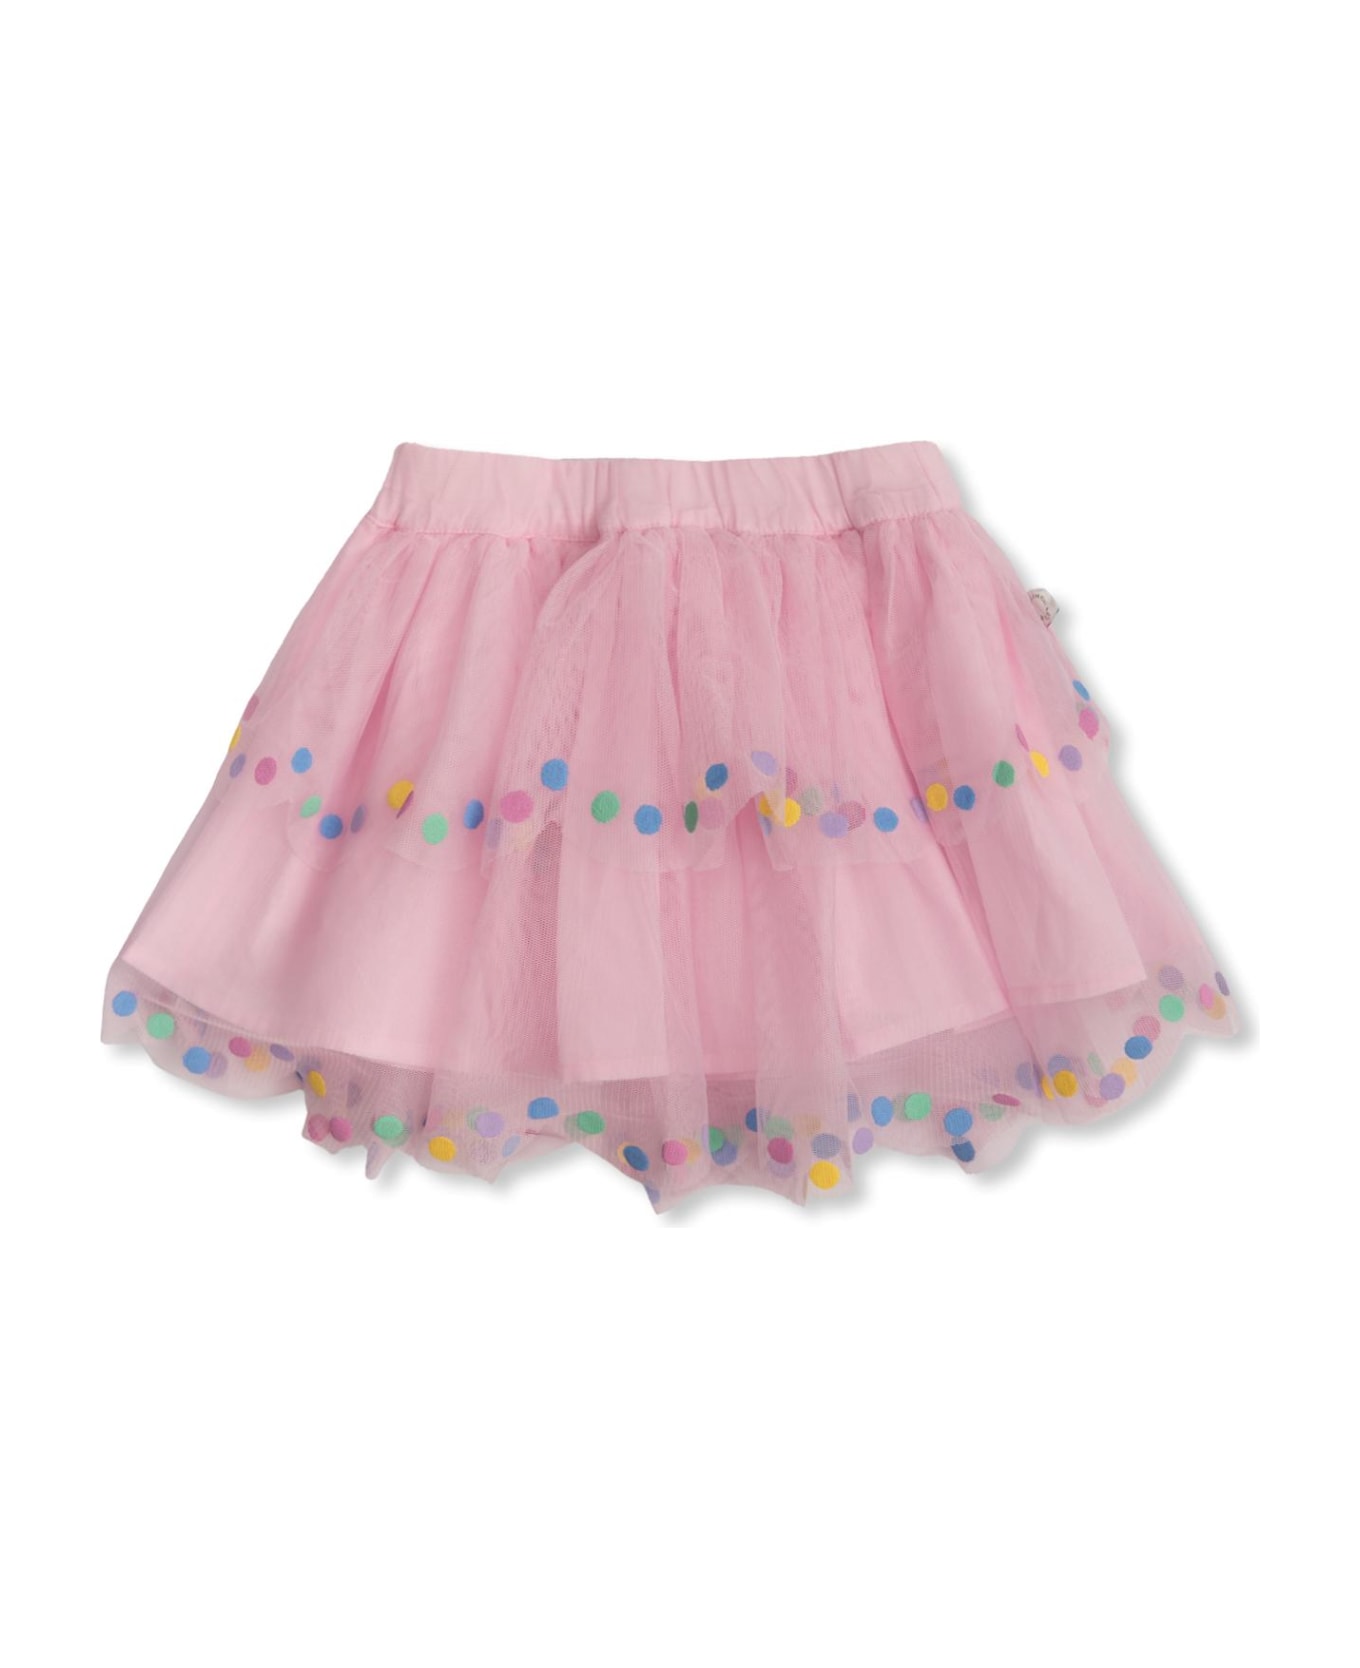 Stella McCartney Kids Tulle Skirt - PINK